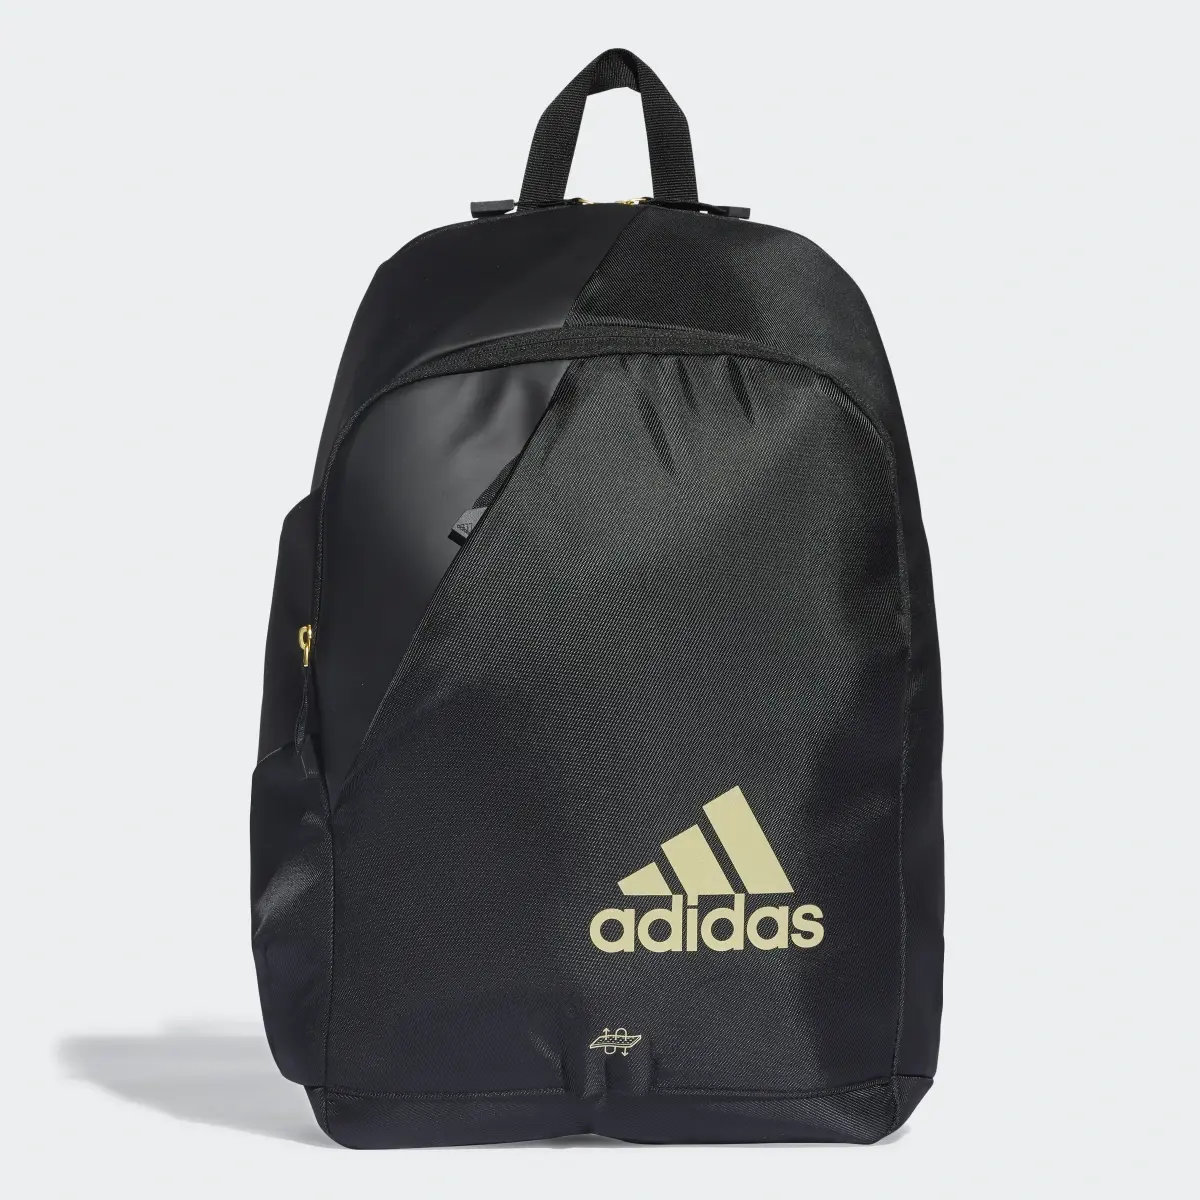 Adidas VS.6 Black/Gold Backpack. 2